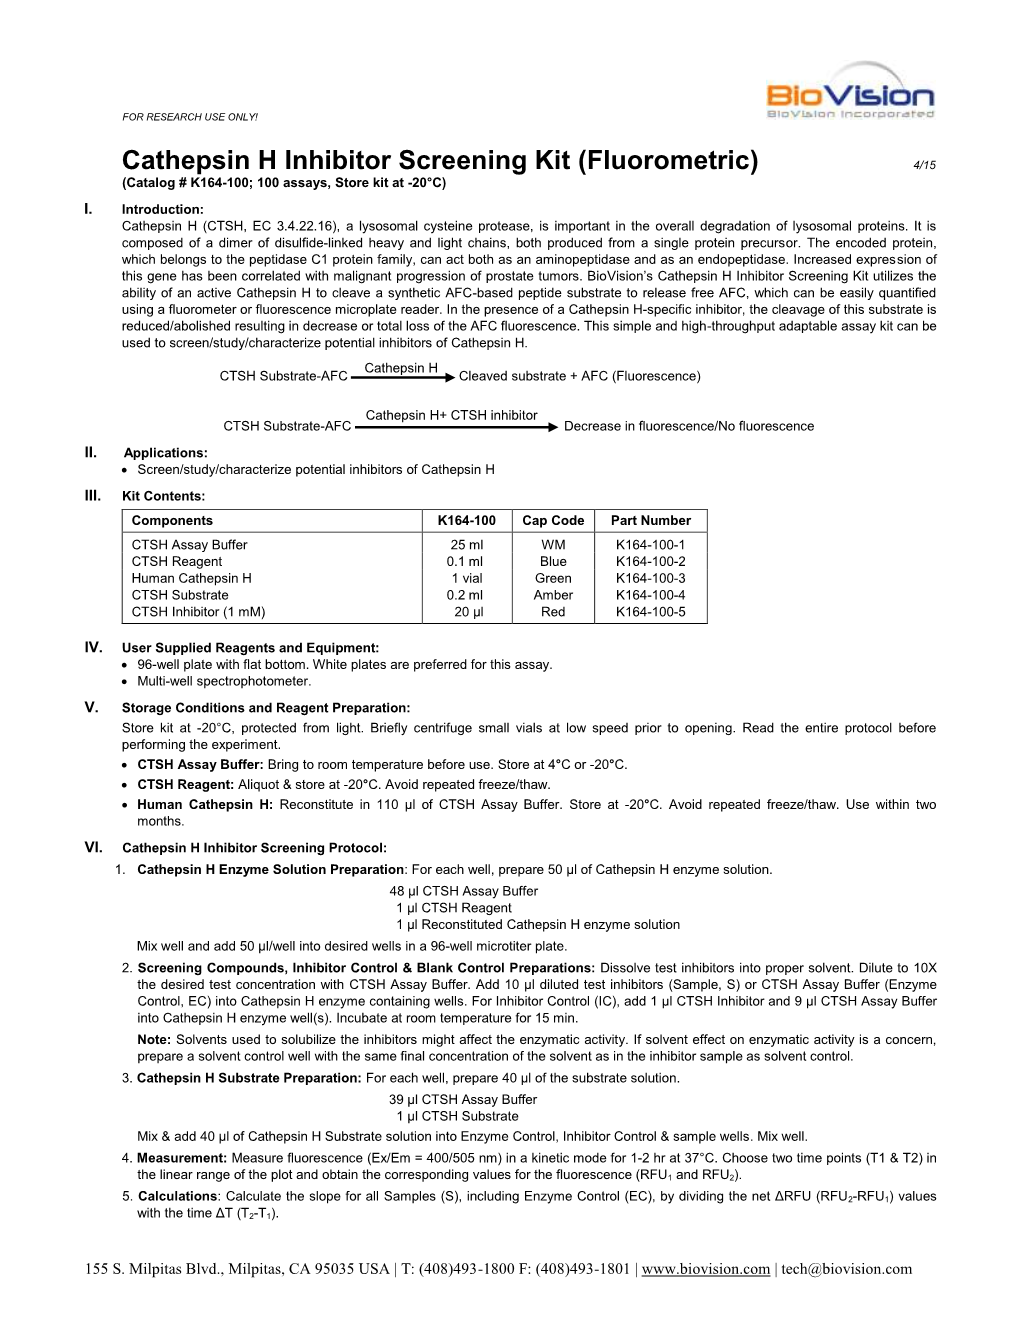 K164-100 Cathepsin H Inhibitor Screening Kit (Fluorometric)